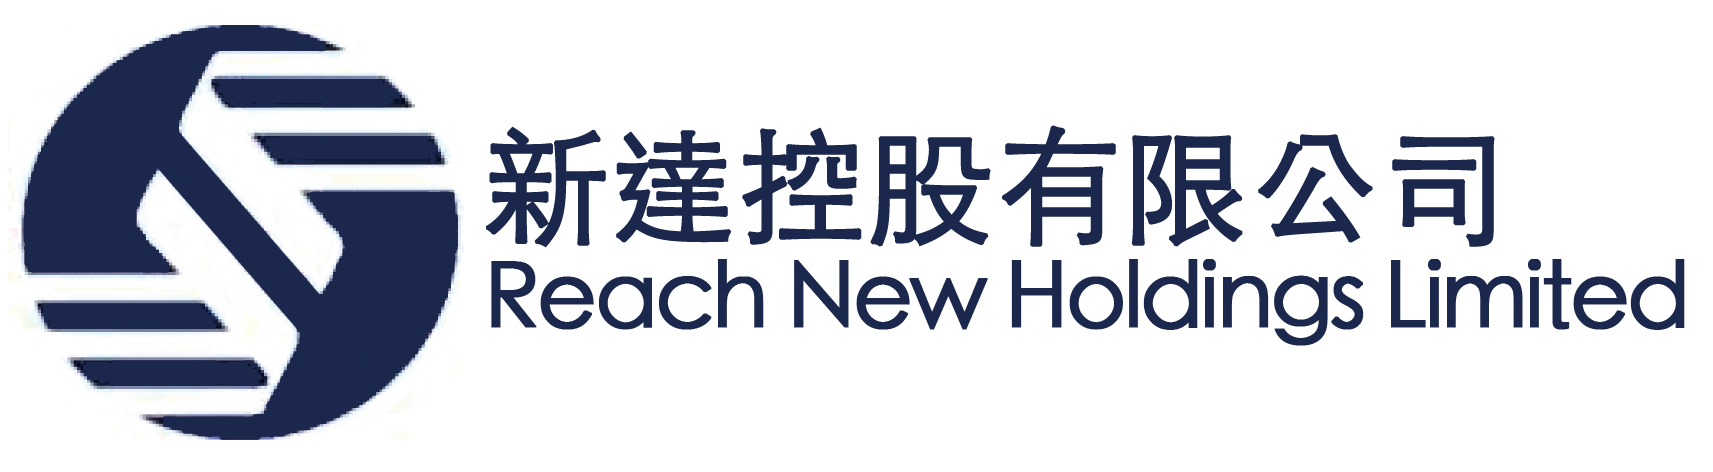 Reach New Holdings Ltd